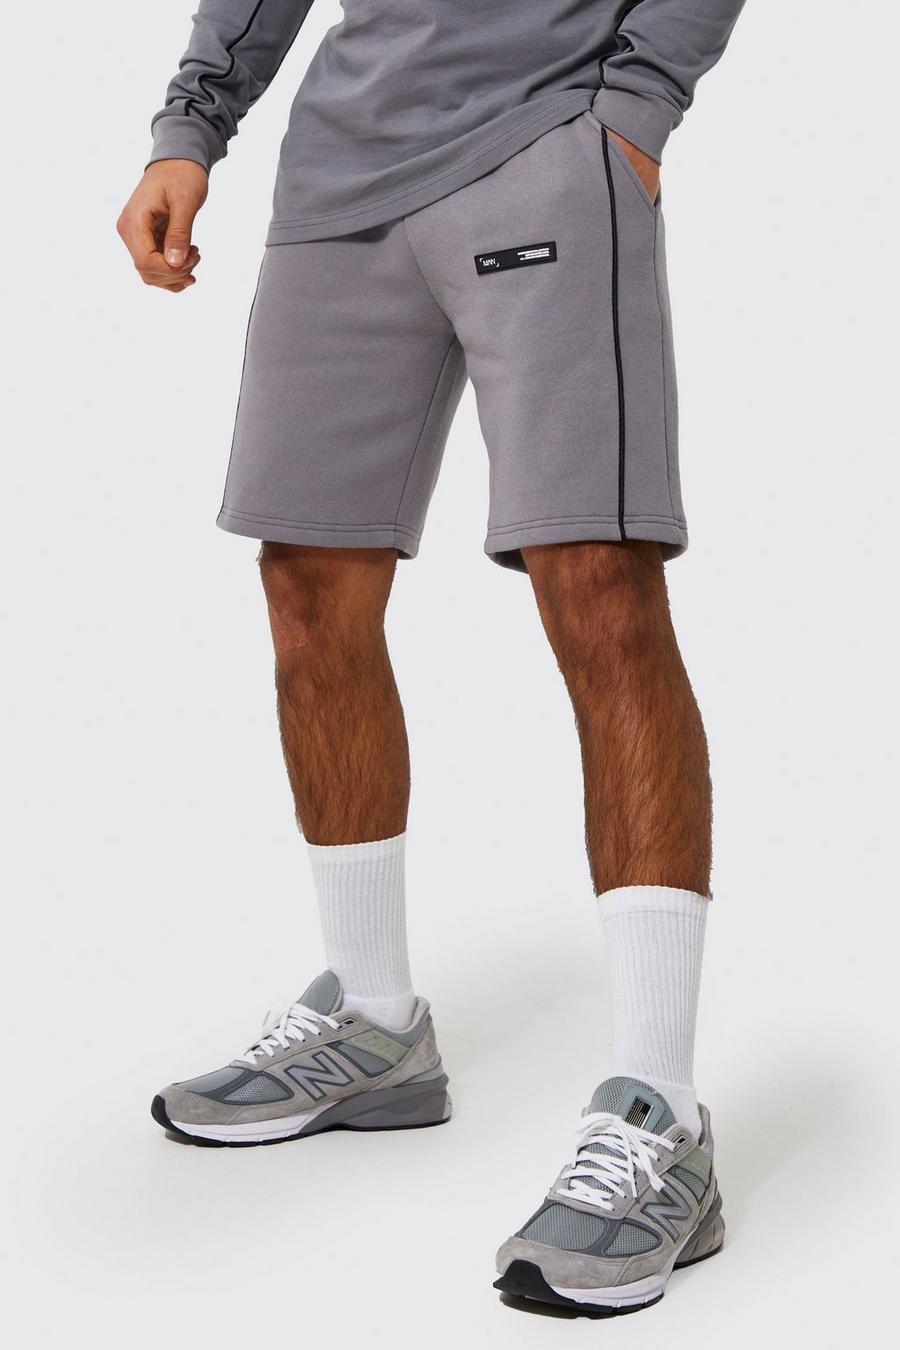 Lockere Shorts mit Paspeln, Charcoal gris